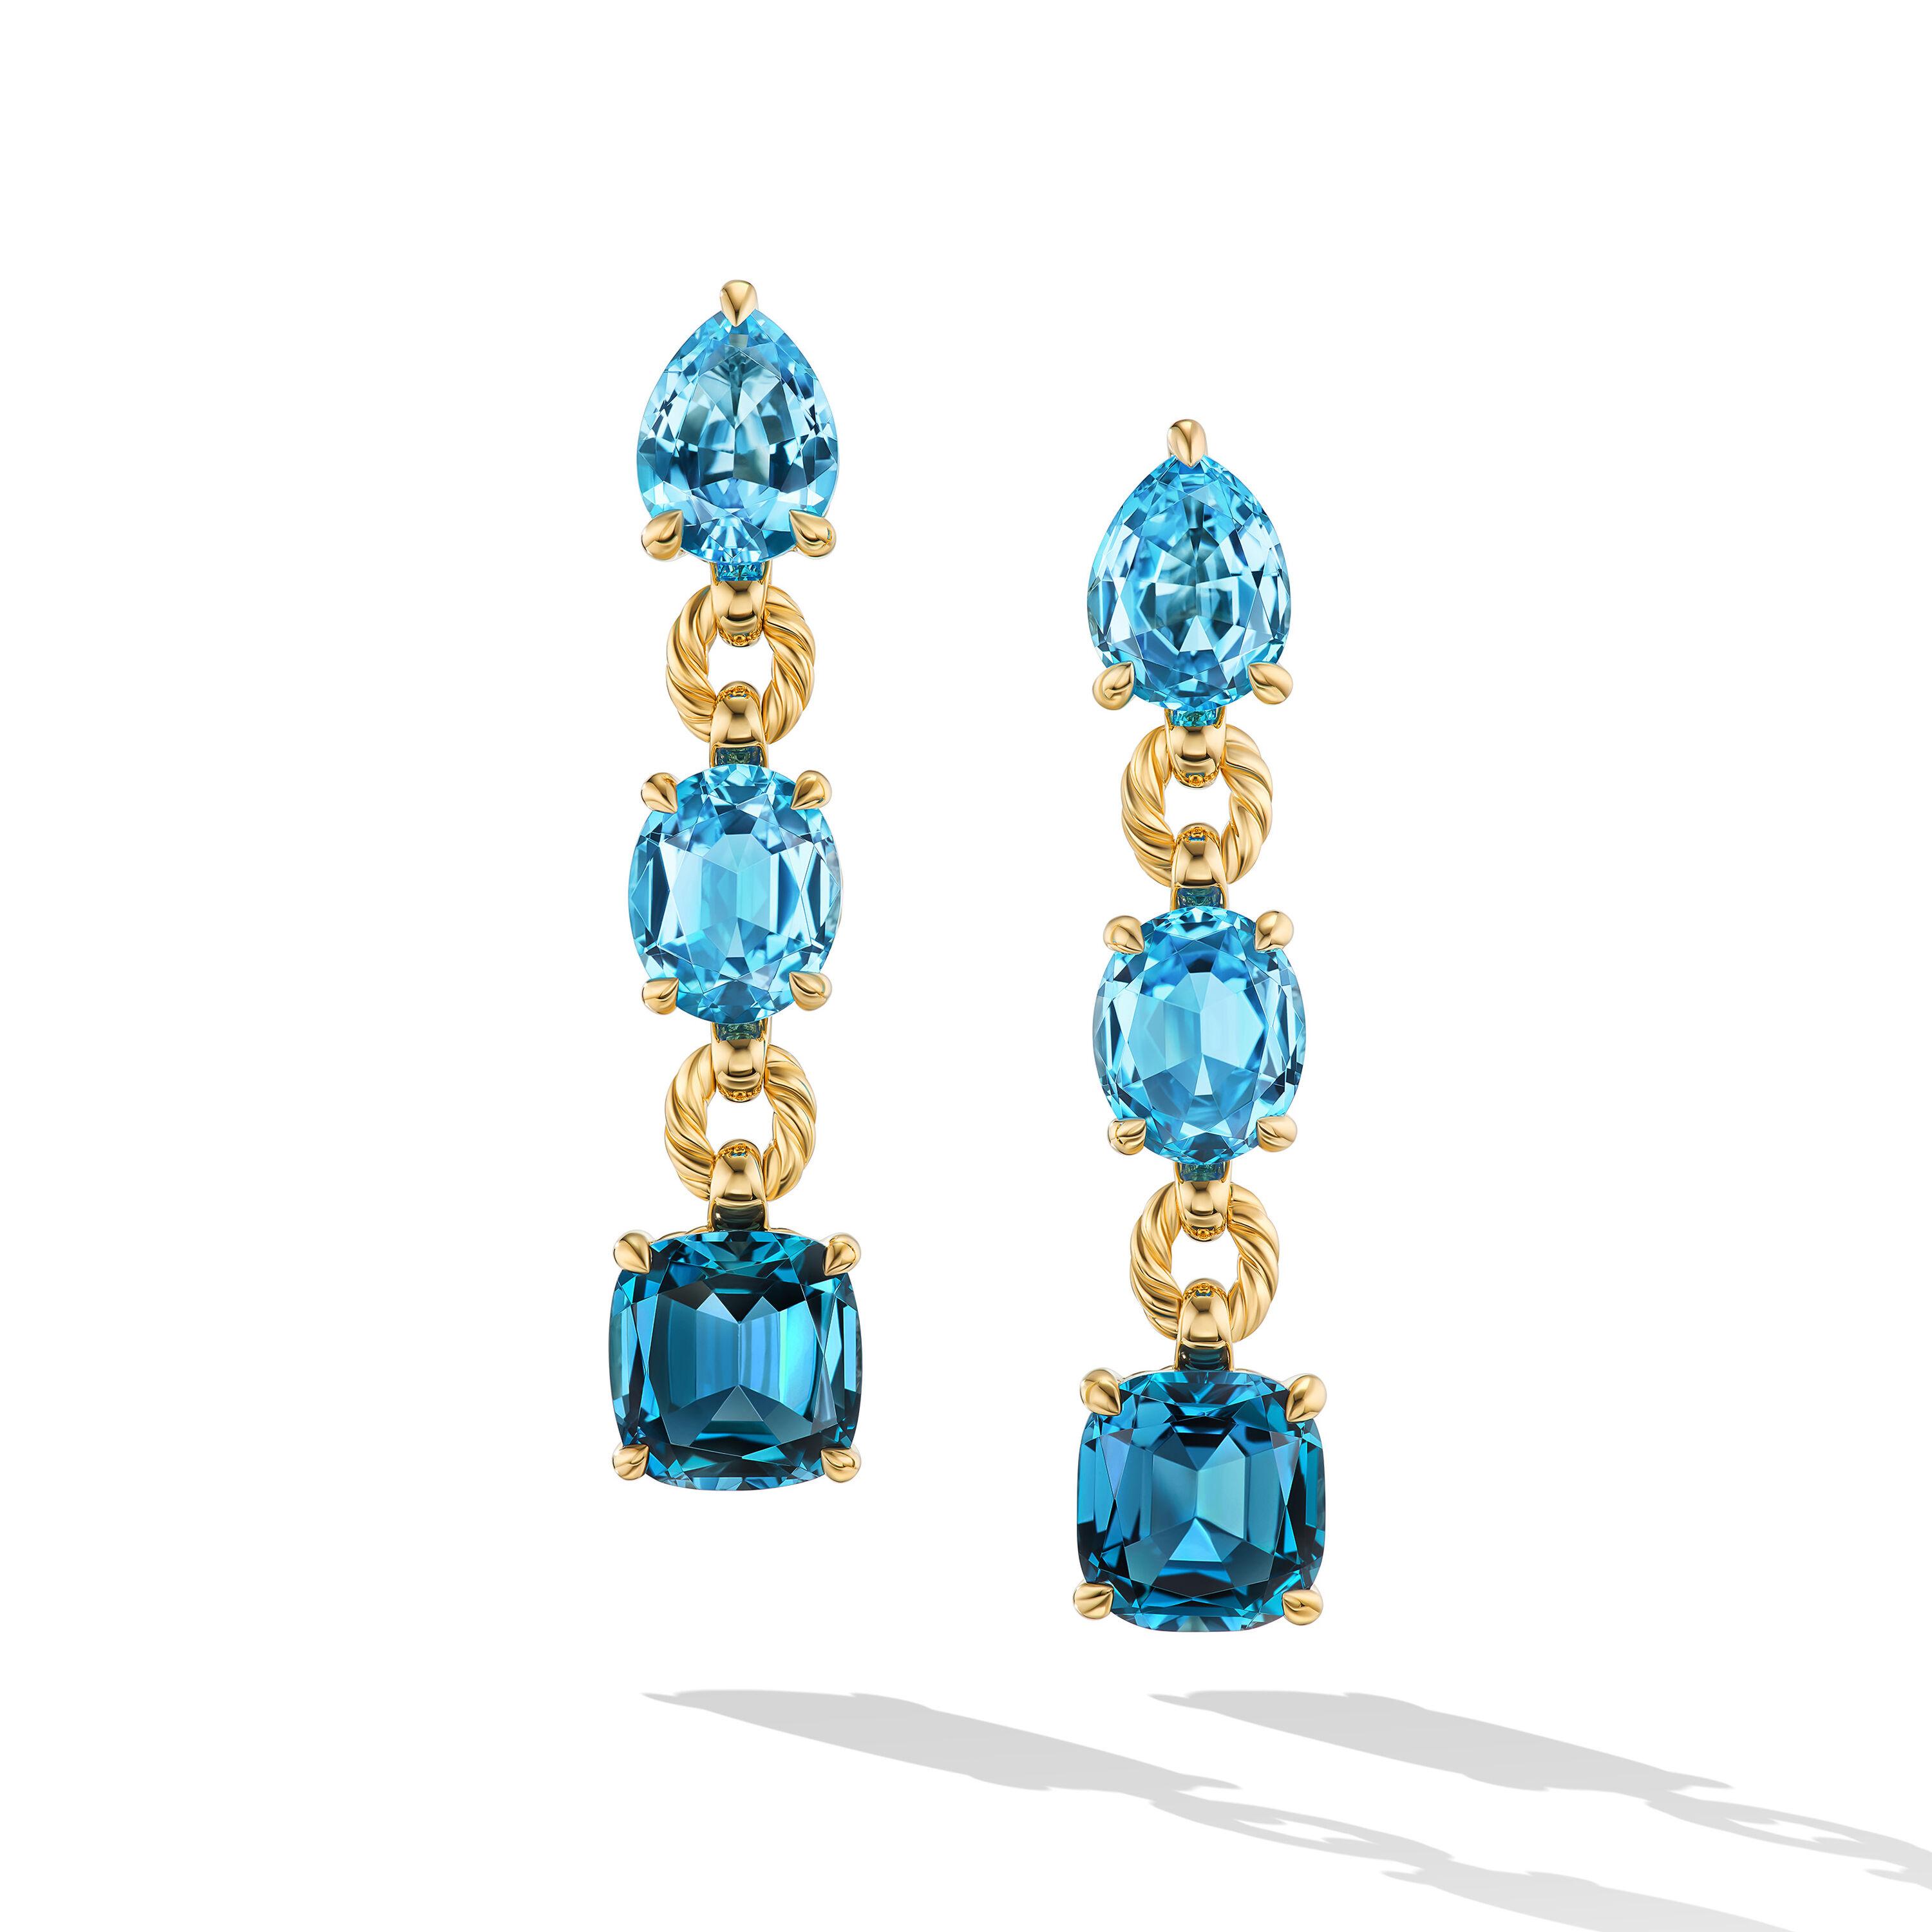 David Yurman Marbella Drop Earrings in 18K Yellow Gold with Blue Topaz and Hampton Blue Topaz